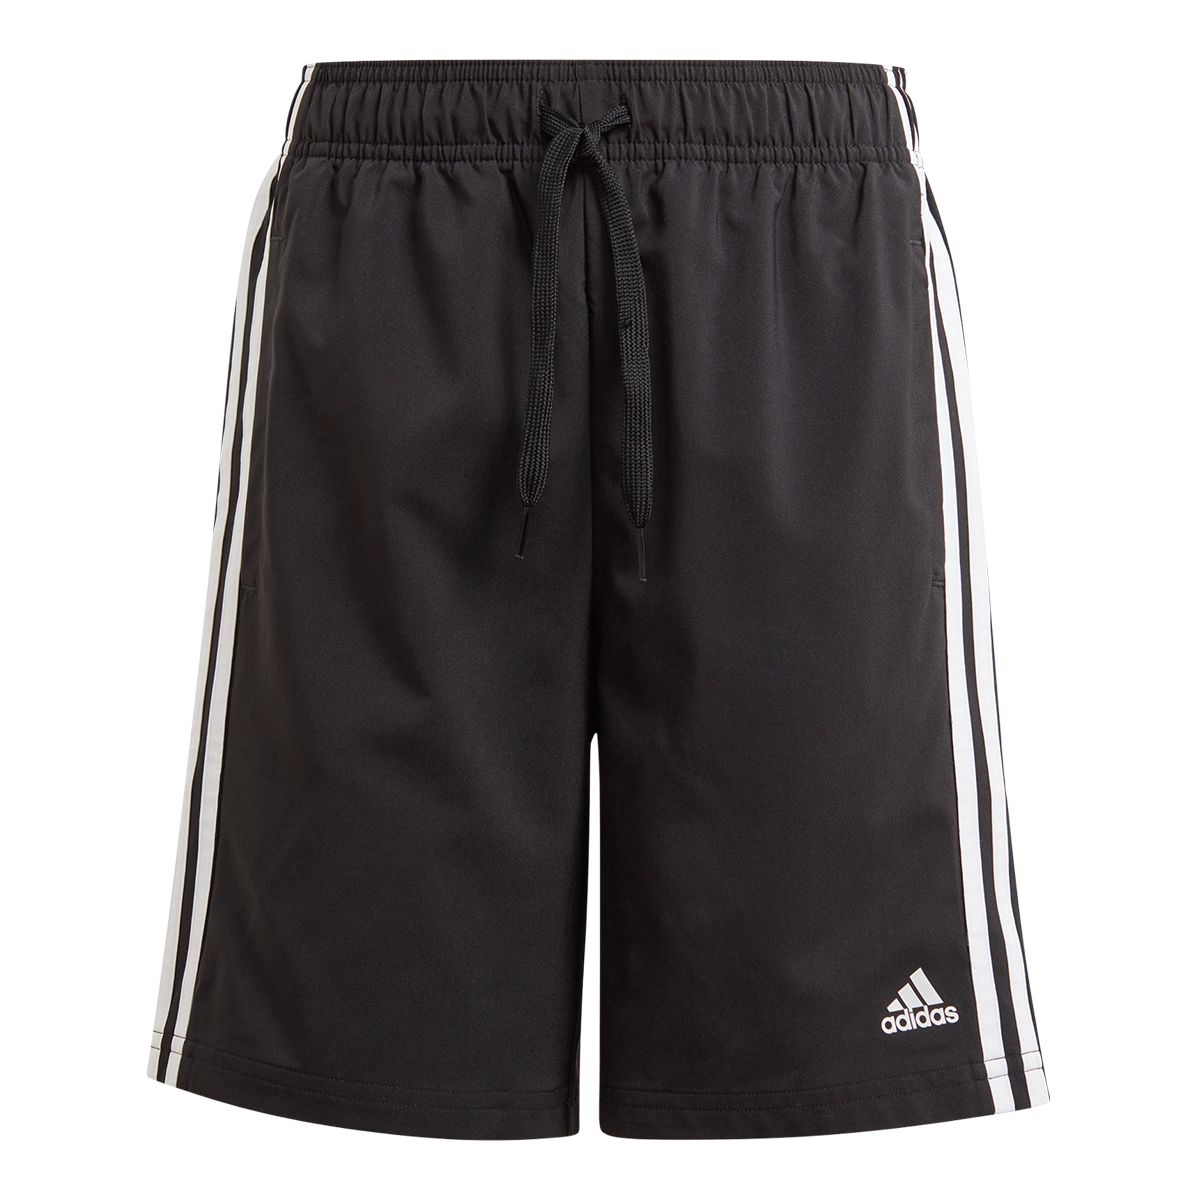 adidas Legends Basketball Shorts - Black, men basketball